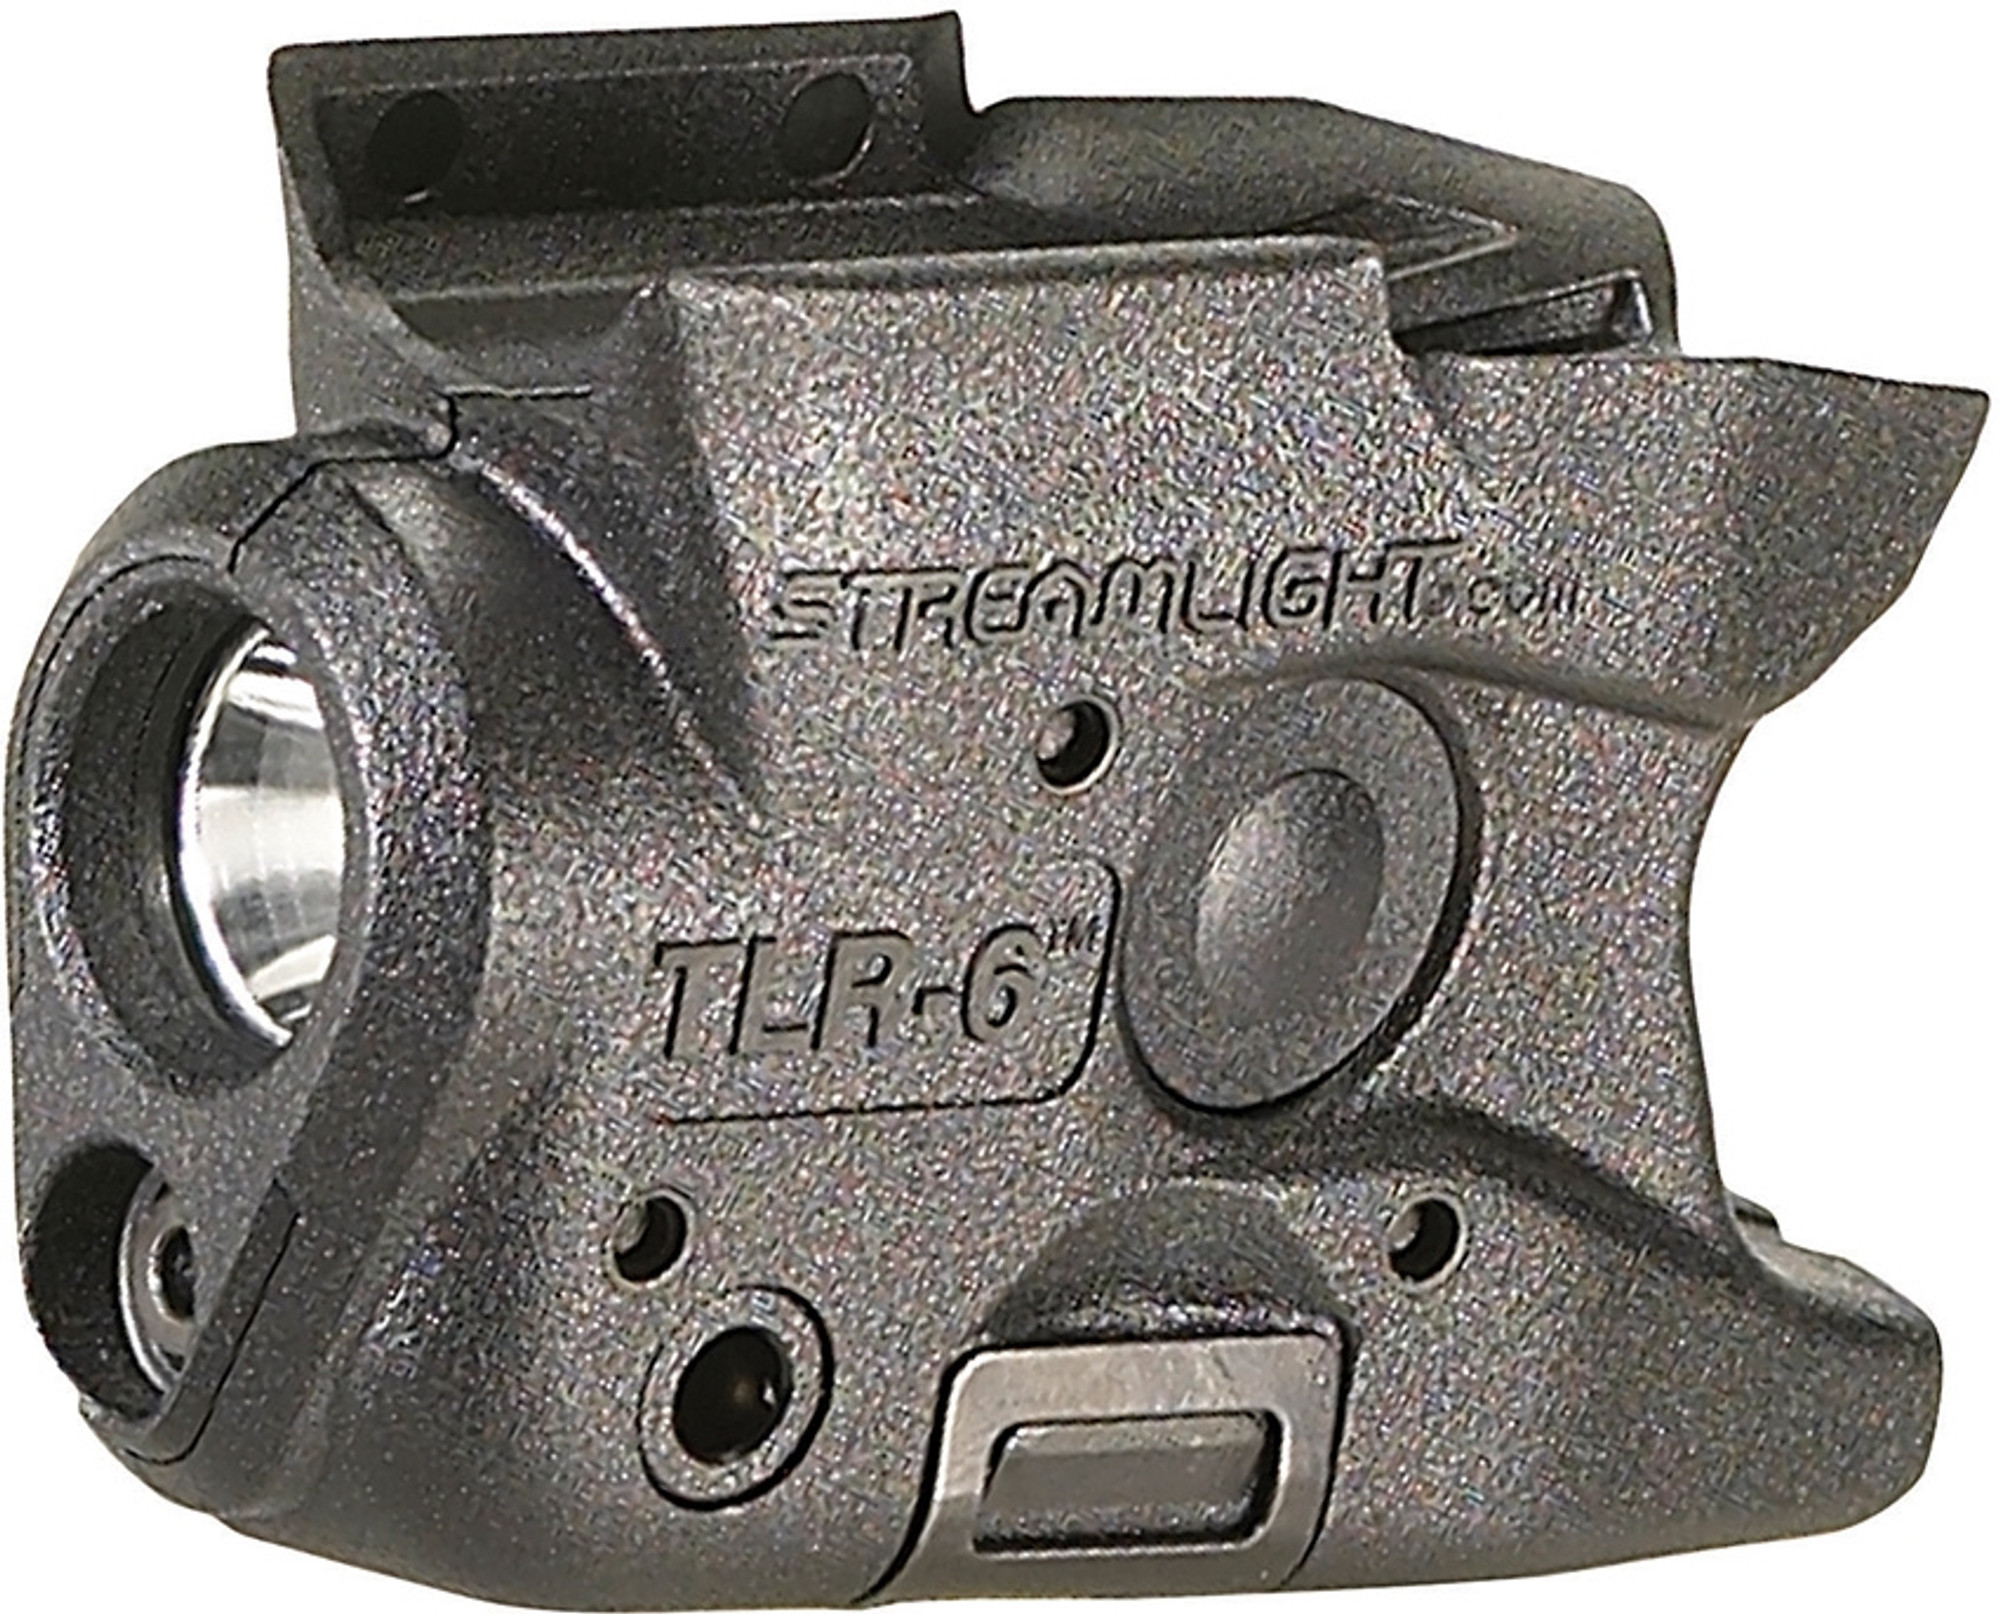 TLR-6 Light M&P Shield 40/9